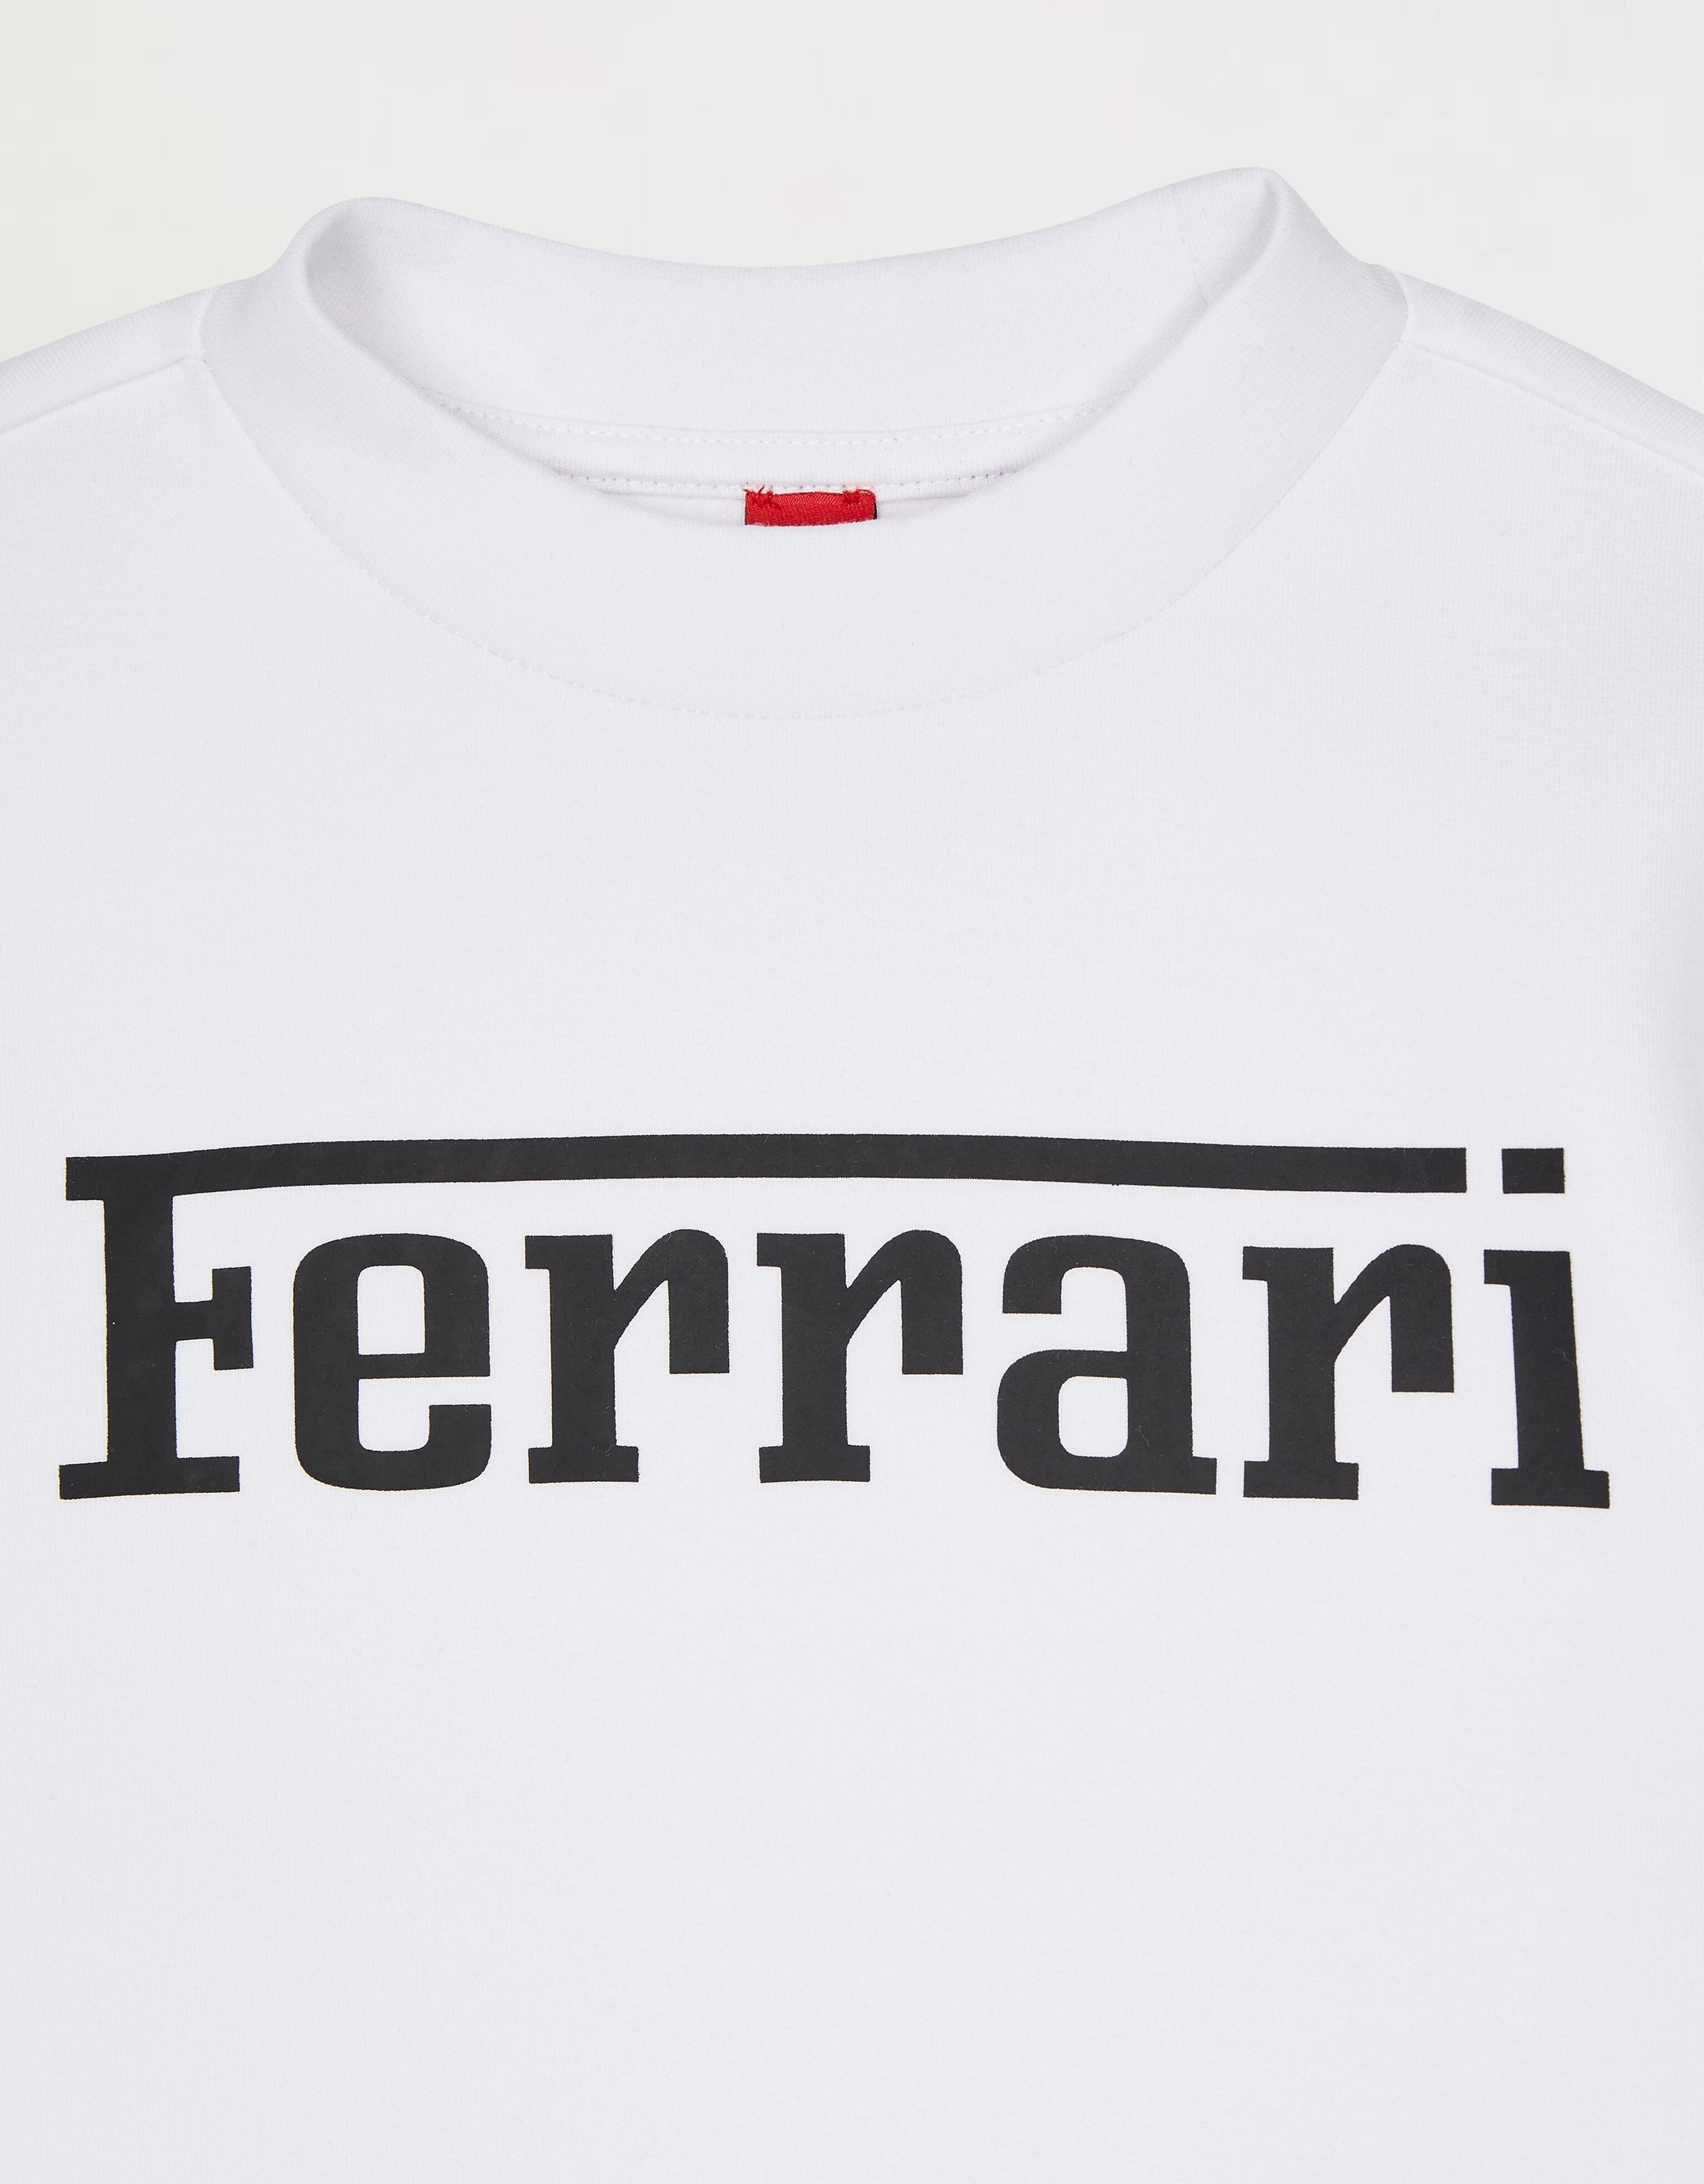 Ferrari Children’s sweatshirt in recycled scuba fabric with large Ferrari logo 光学白 46994fK